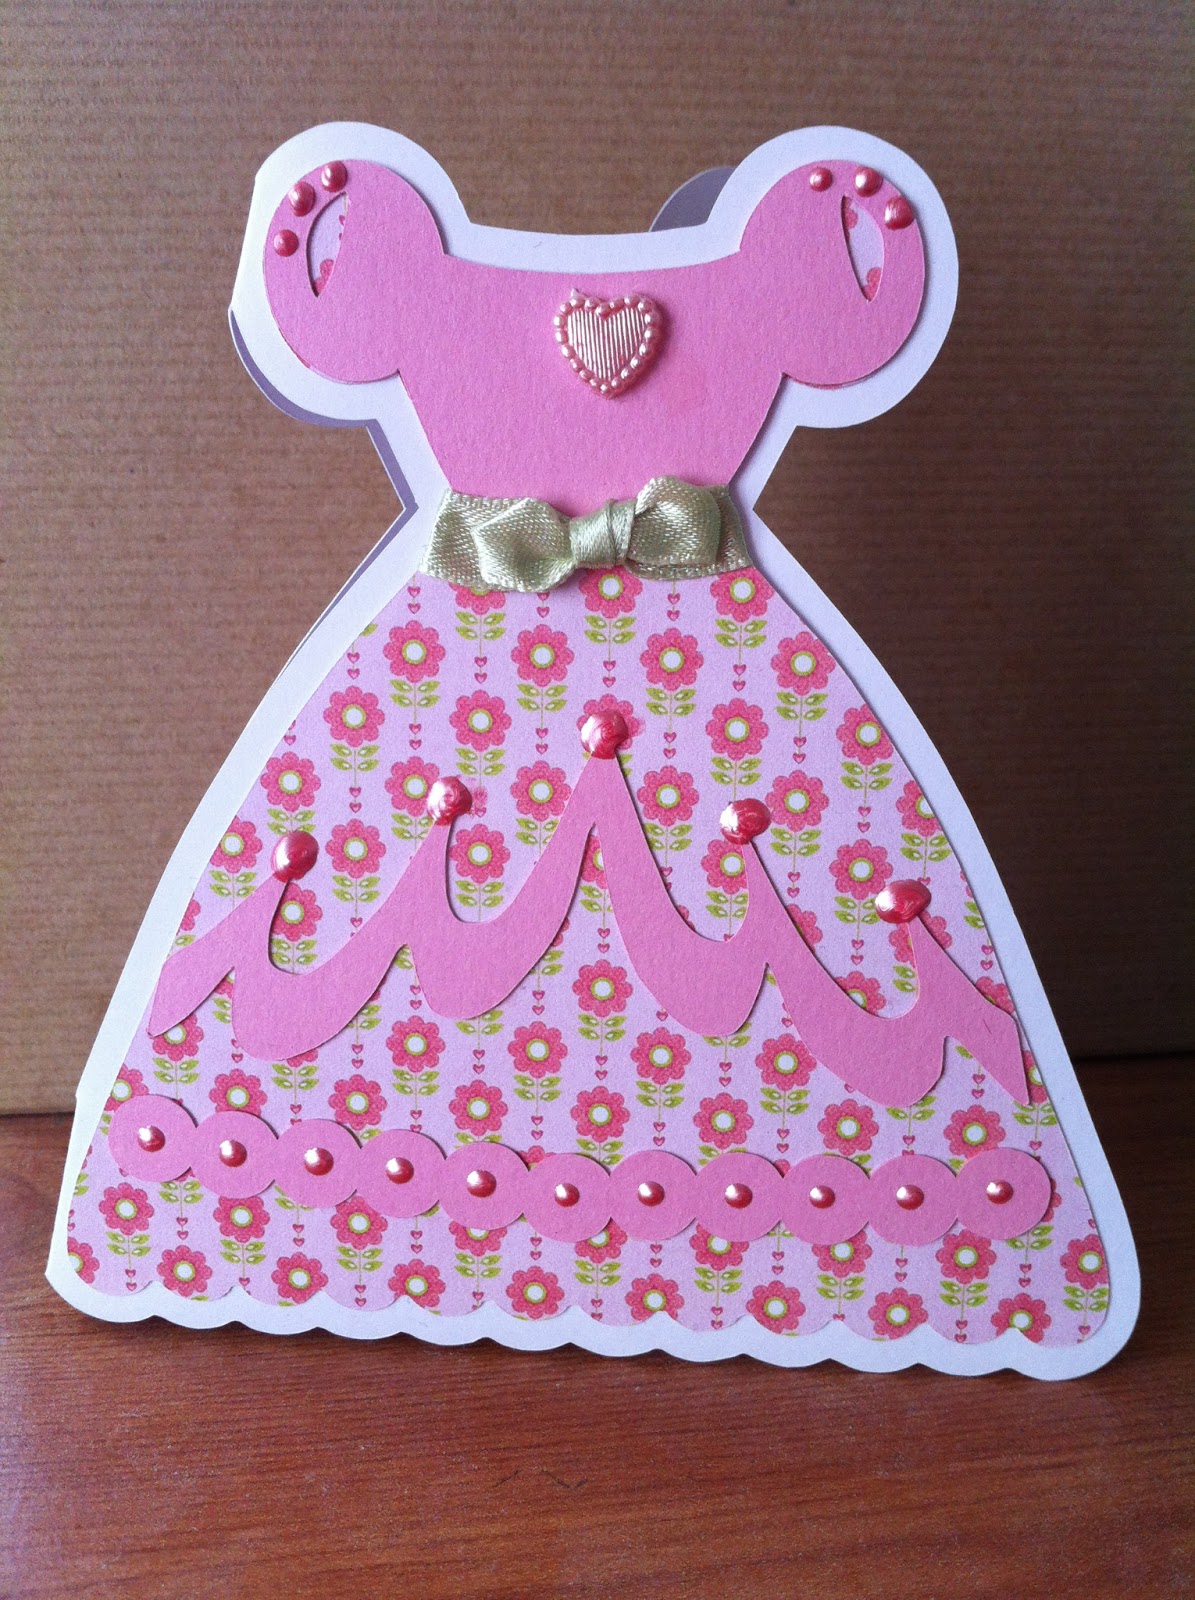 LaceTopDesigns: Princess Dress Card using Craft Robo